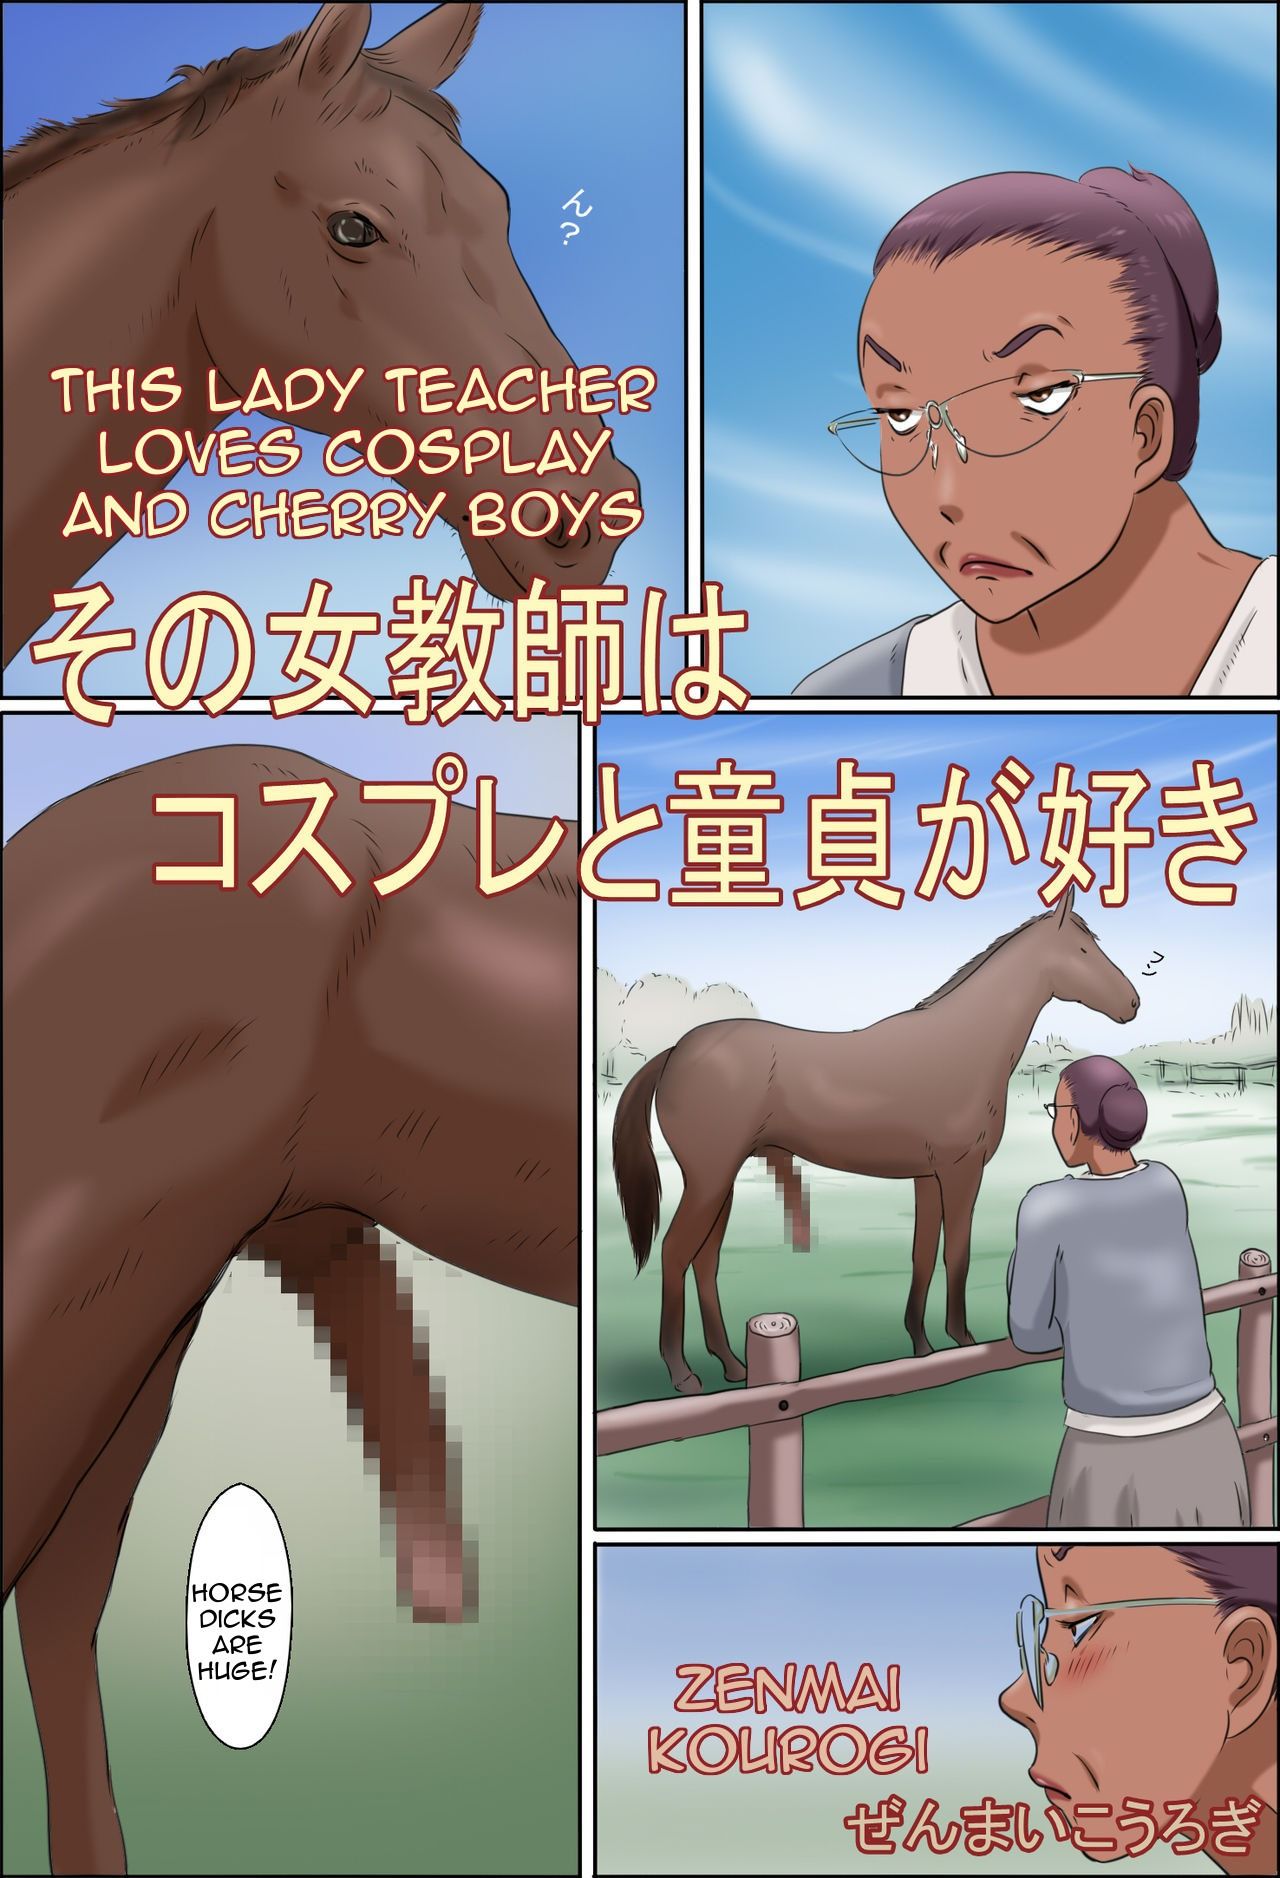 Lady Teacher Loves Cosplay and Cherry Boys Zenmai Kourogi page 1